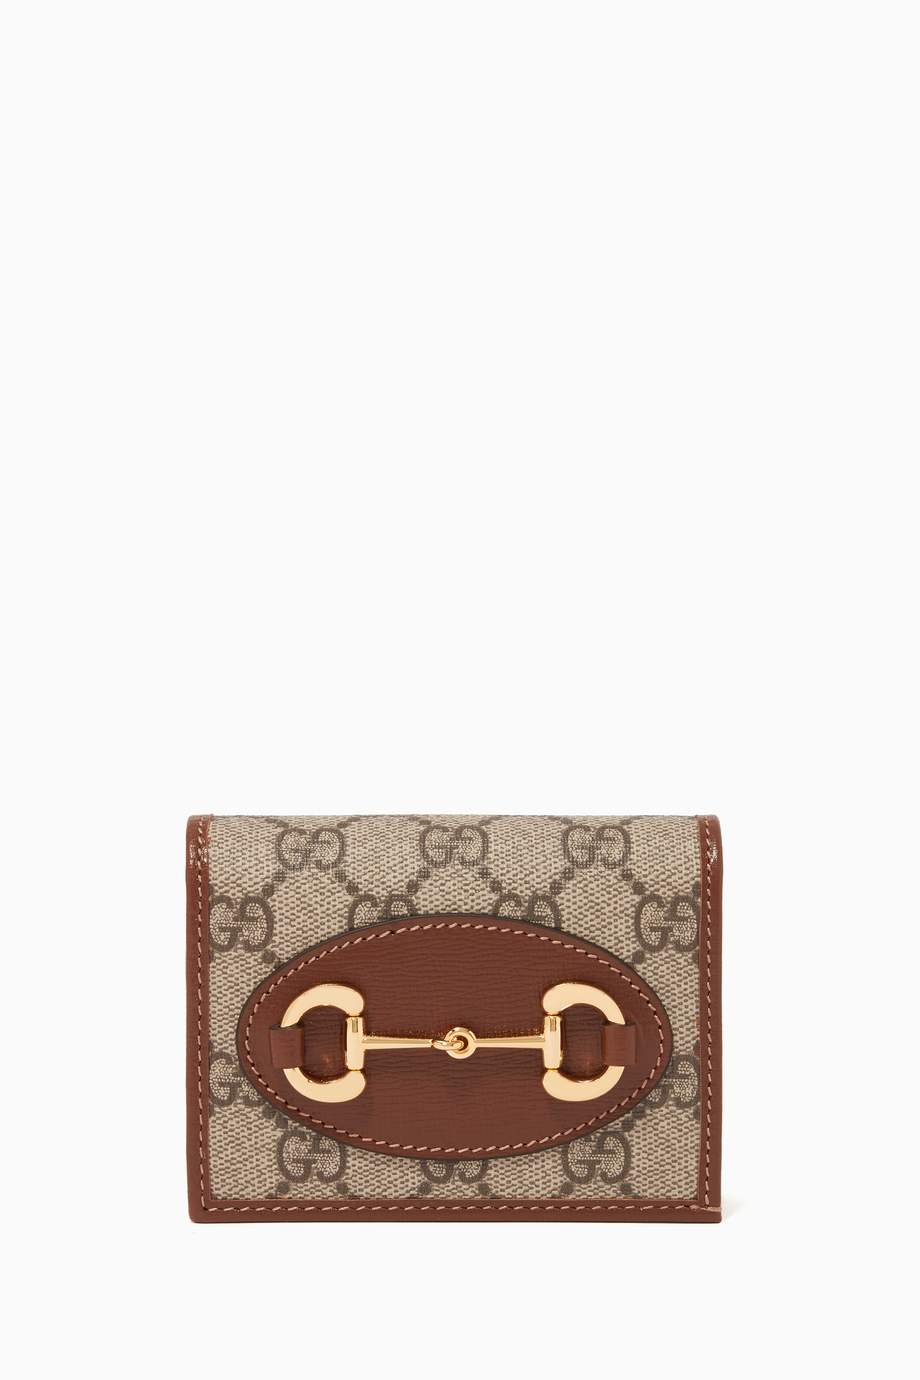 Shop Gucci Brown Gucci 1955 Horsebit Card Case Wallet for Women | Ounass UAE